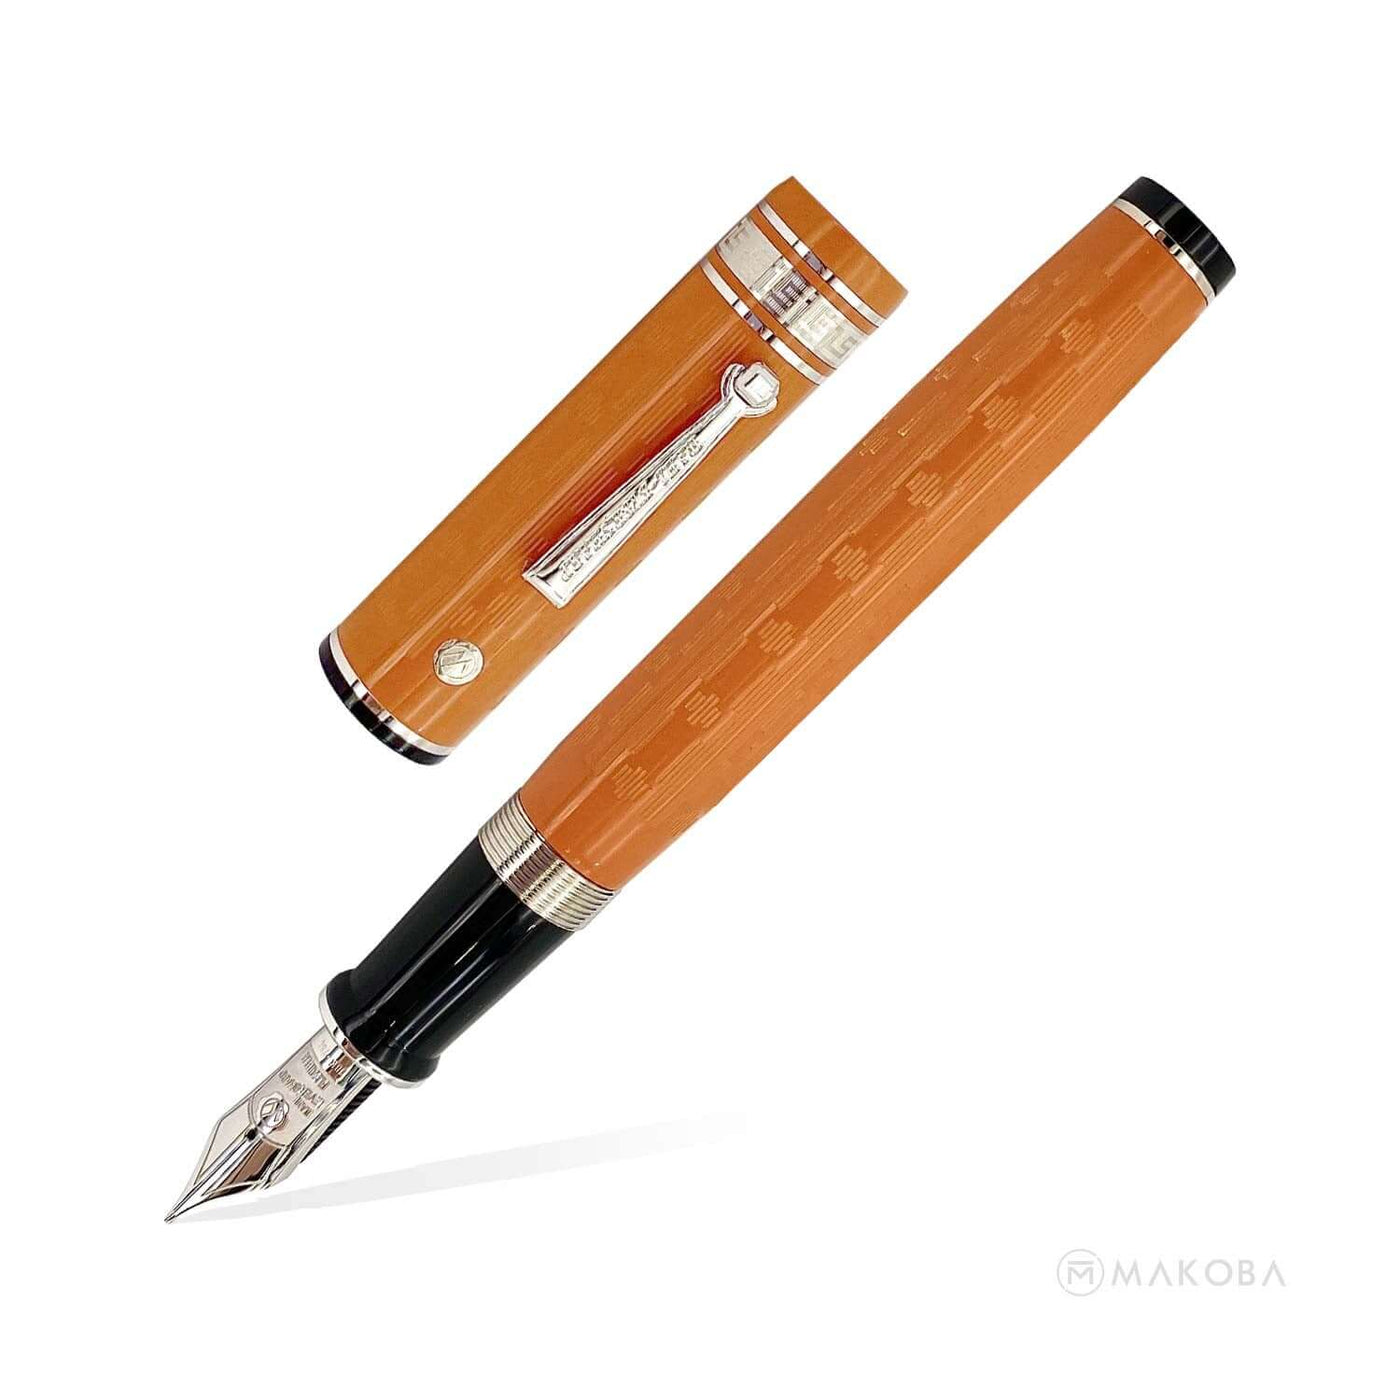 Wahl Eversharp Decoband Oversized Fountain Pen, Gatsby Orange / Rhodium Trim - Super Flex 18k Gold Nib 1